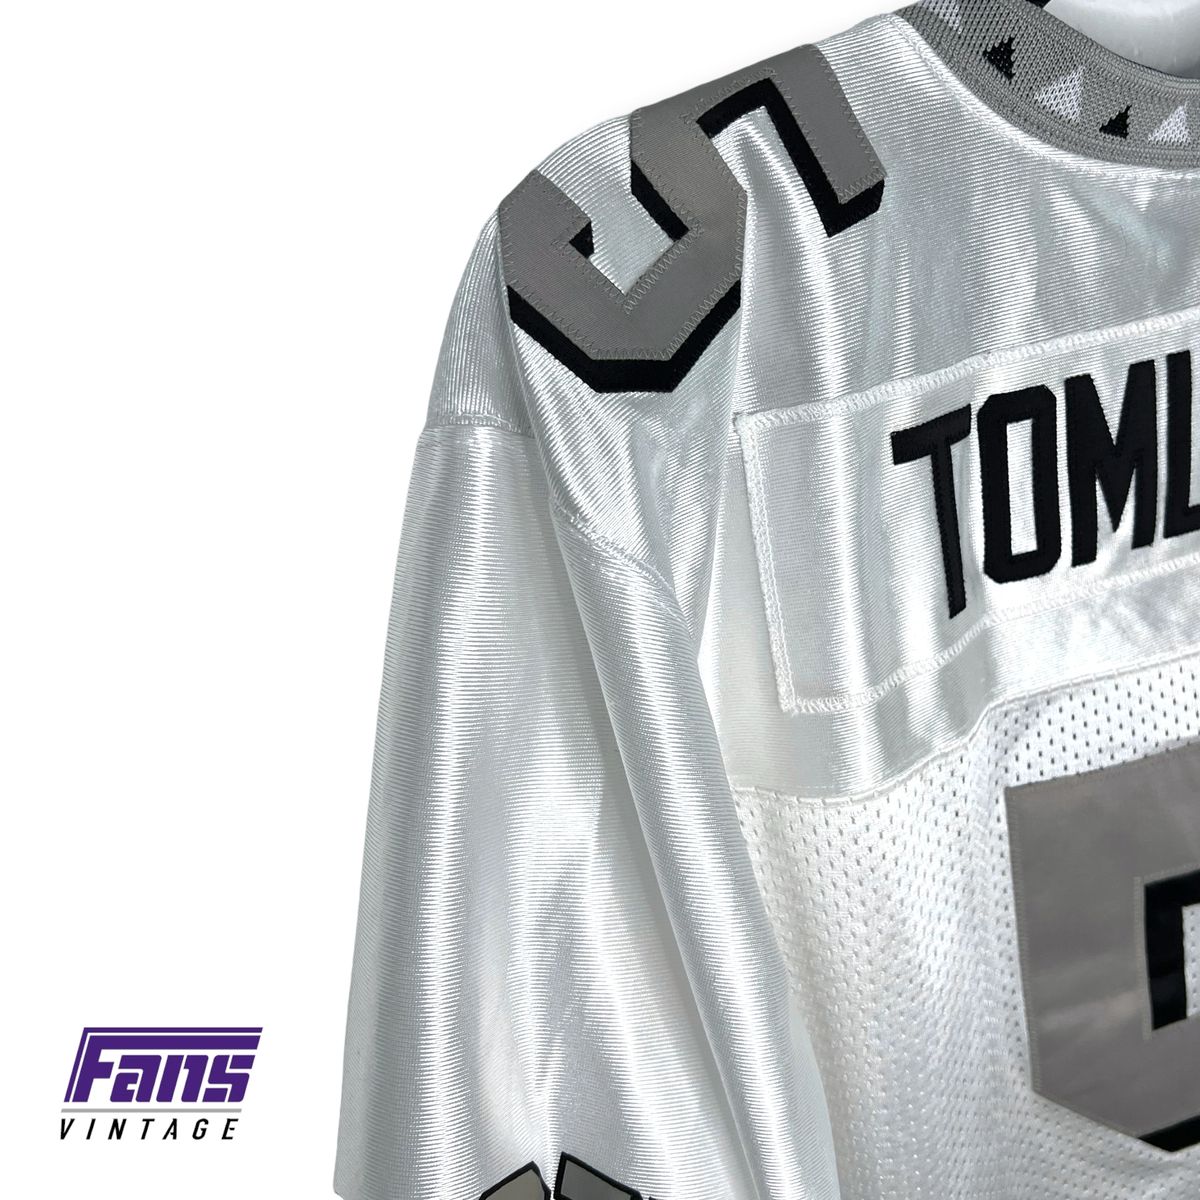 *Grail LaDainian Tomlinson Jersey!* Vintage Nike 2000 TCU Football LT Jersey